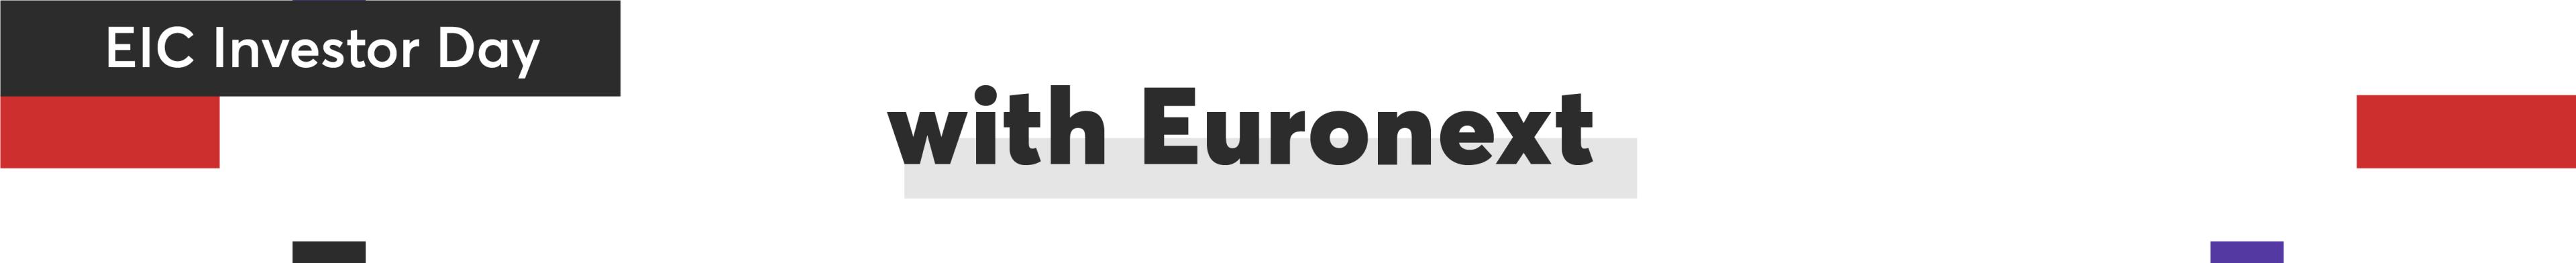 eic_investor_days_euronext_community_banner.jpg